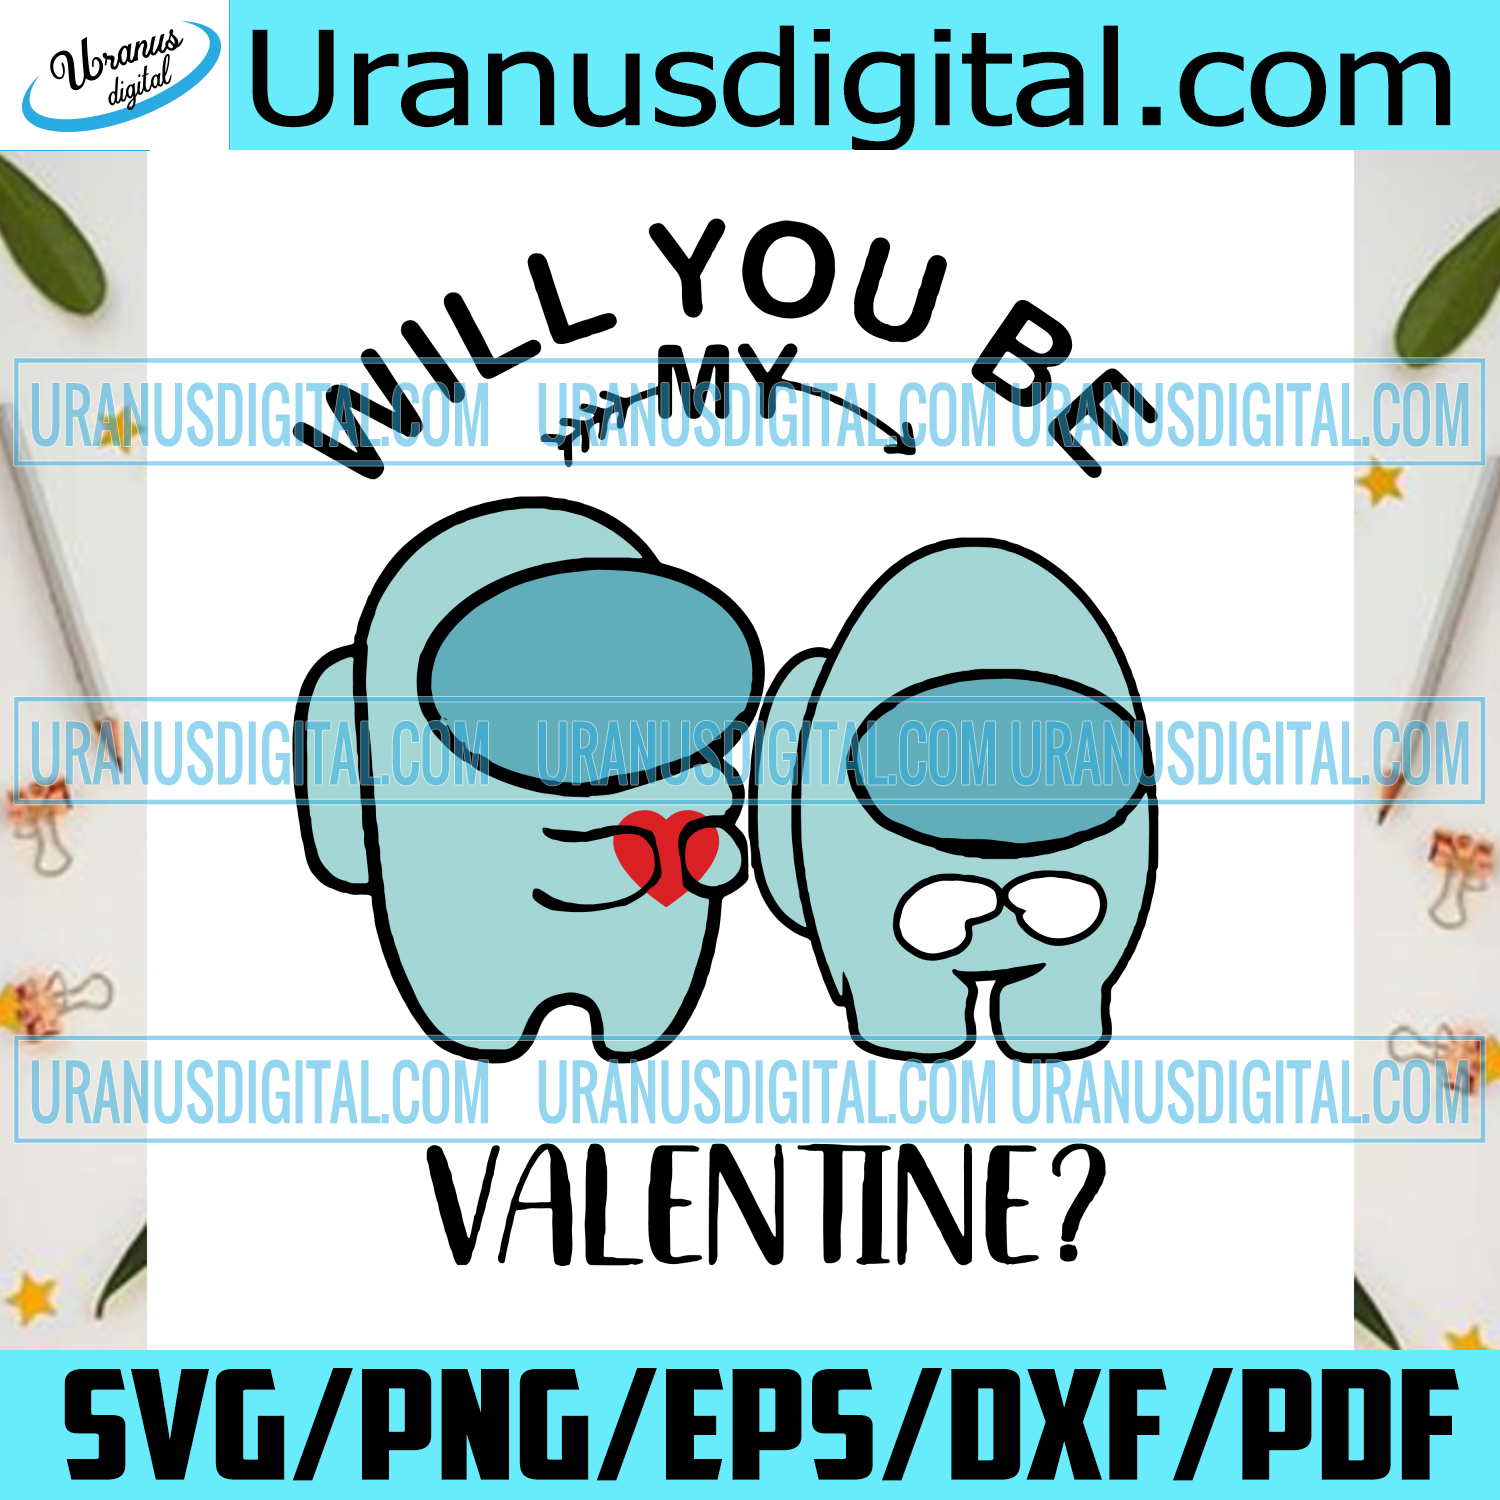 Download Will You Be My Valentine Svg Valentine Svg Valentines Day Svg Among Uranusdigital